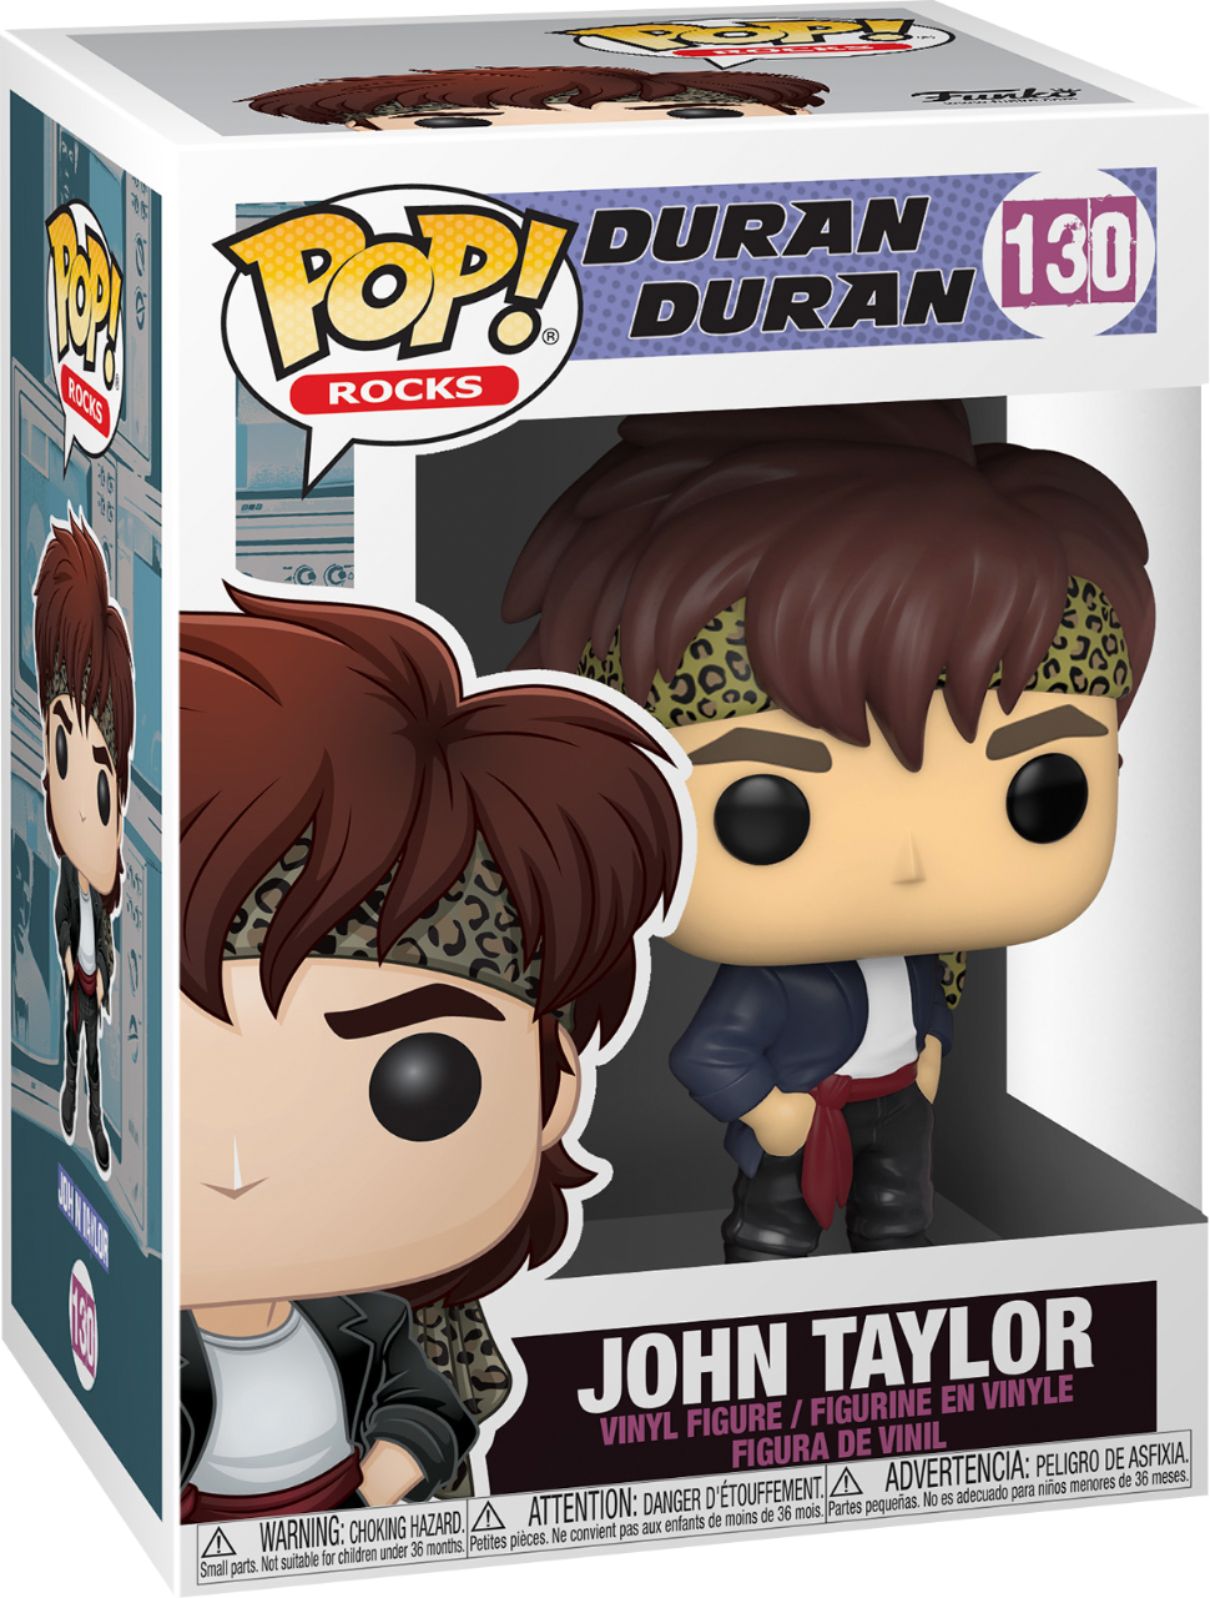 Duran Duran Andy Taylor #127 Vinyl Figure FUNKO POP ROCKS